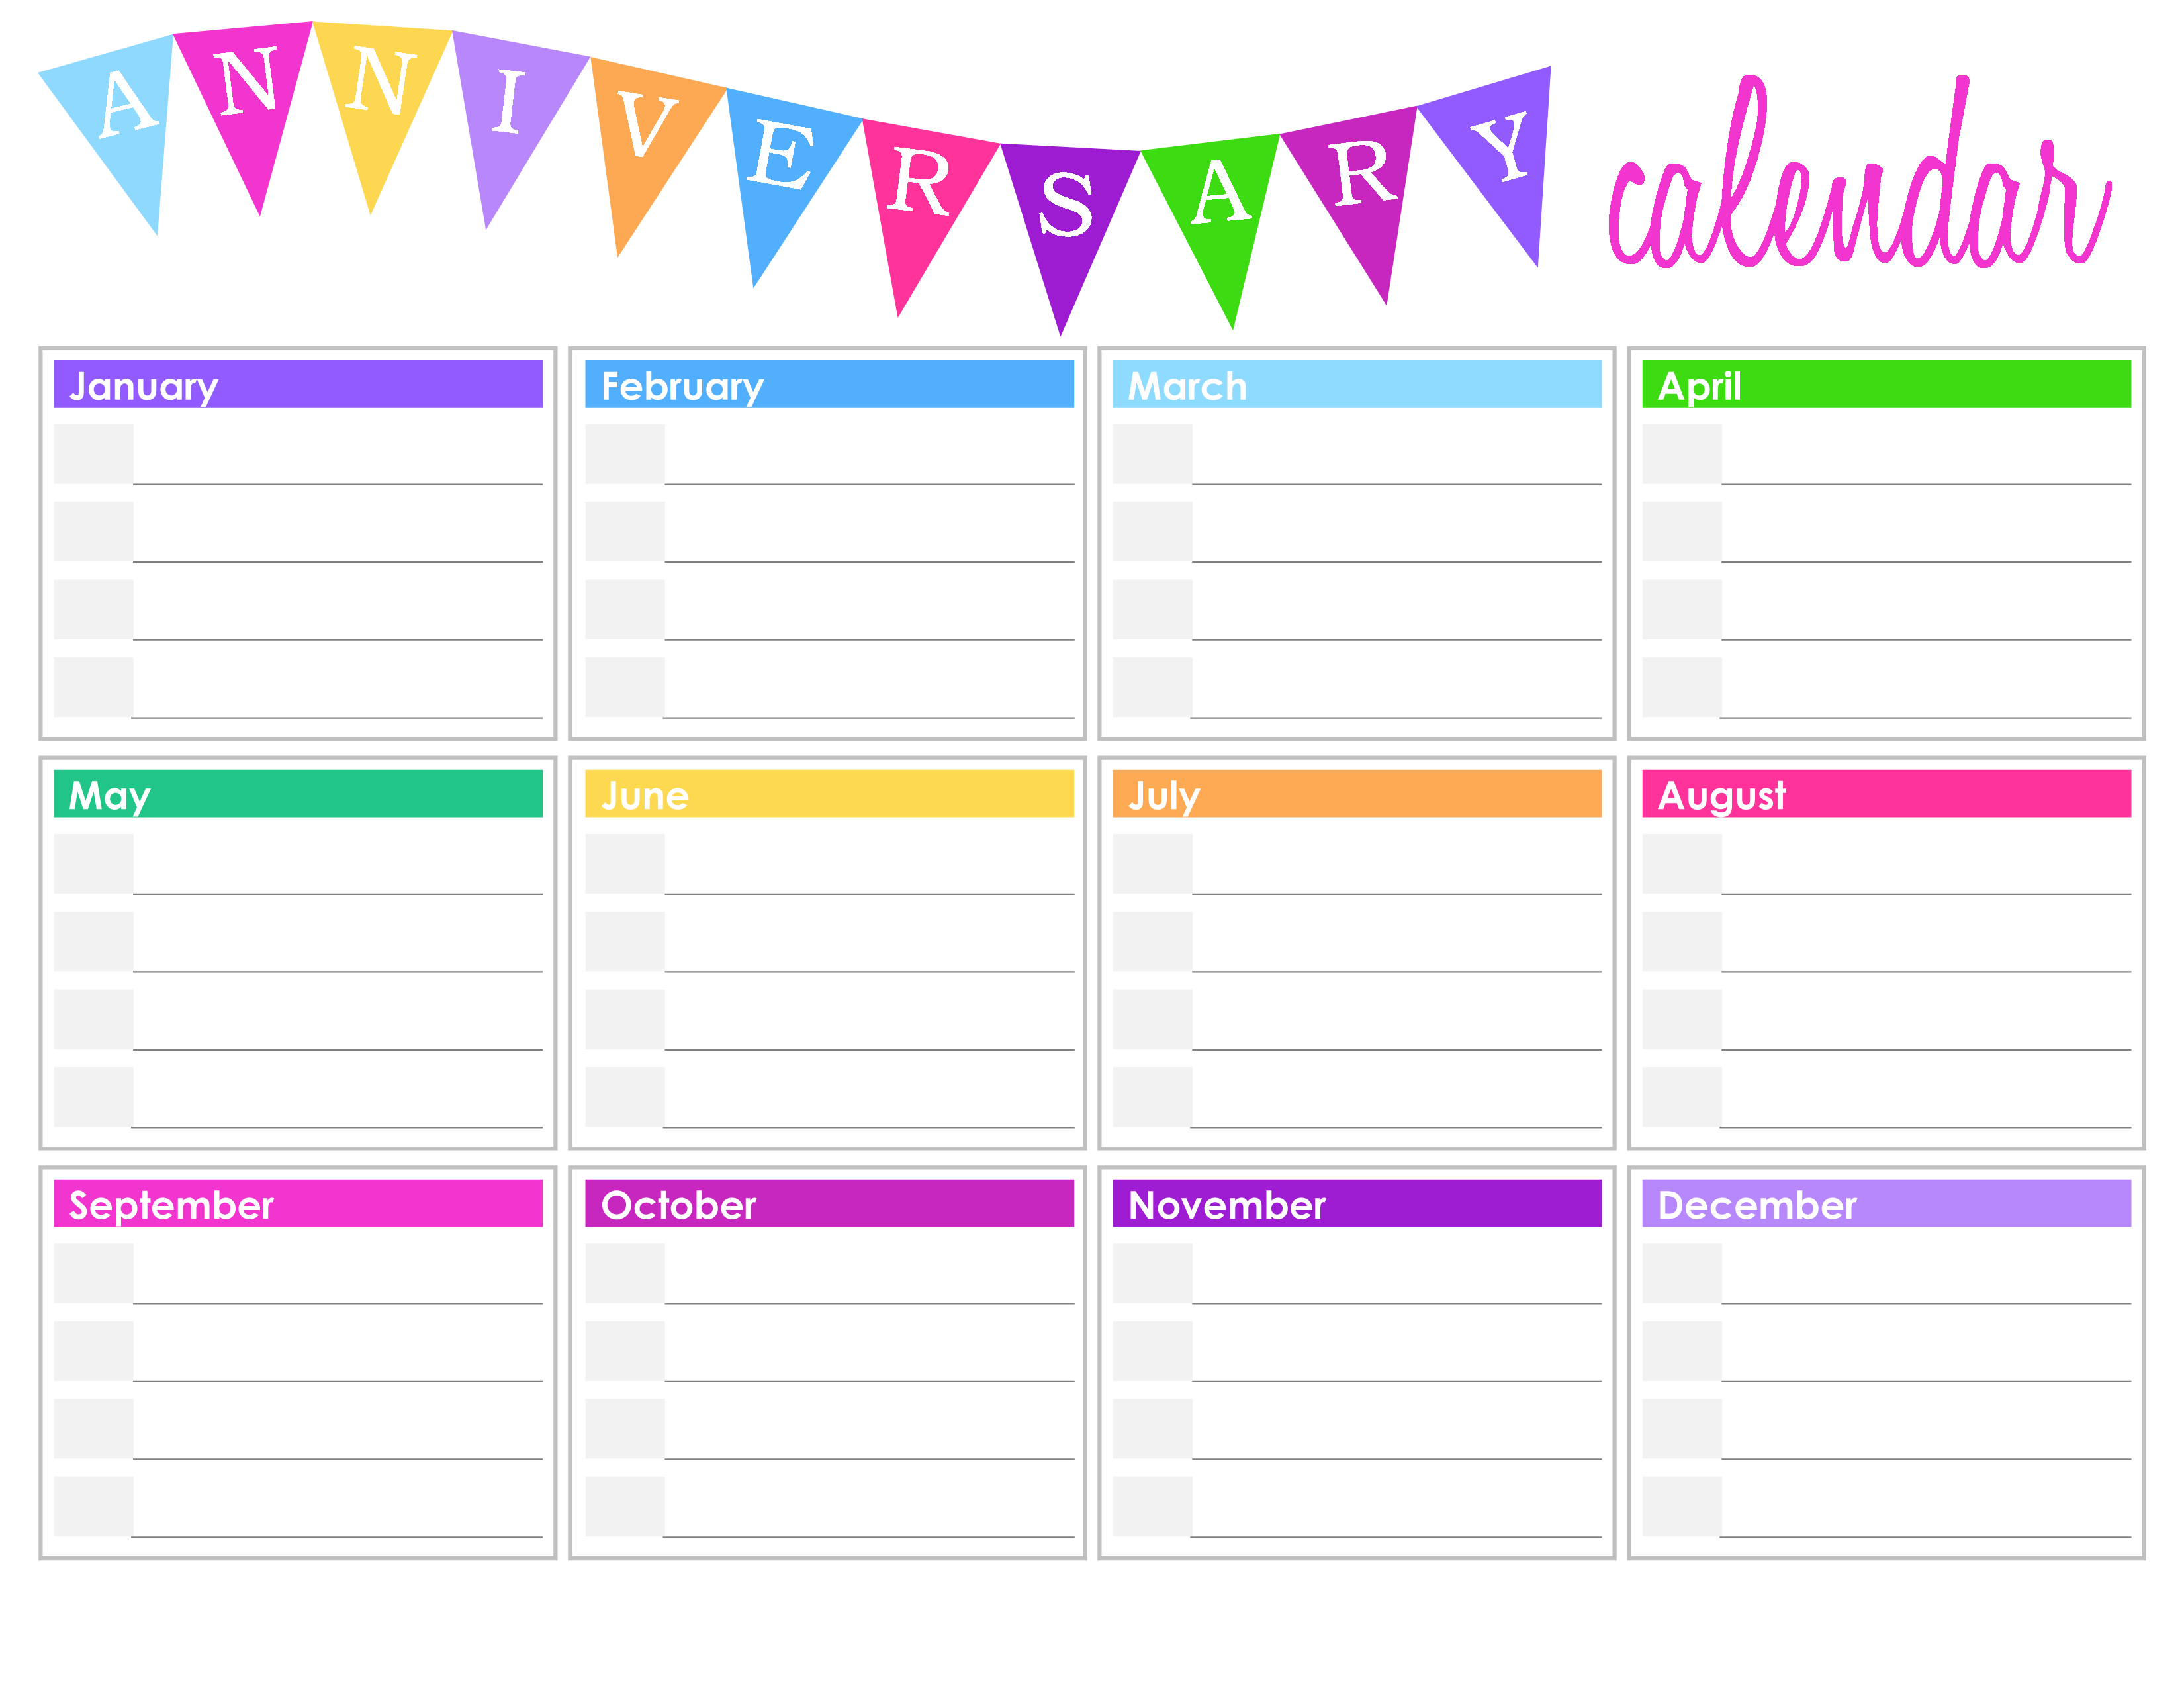 Birthday Calendar Template Excel Birthday Calendar Download Printable